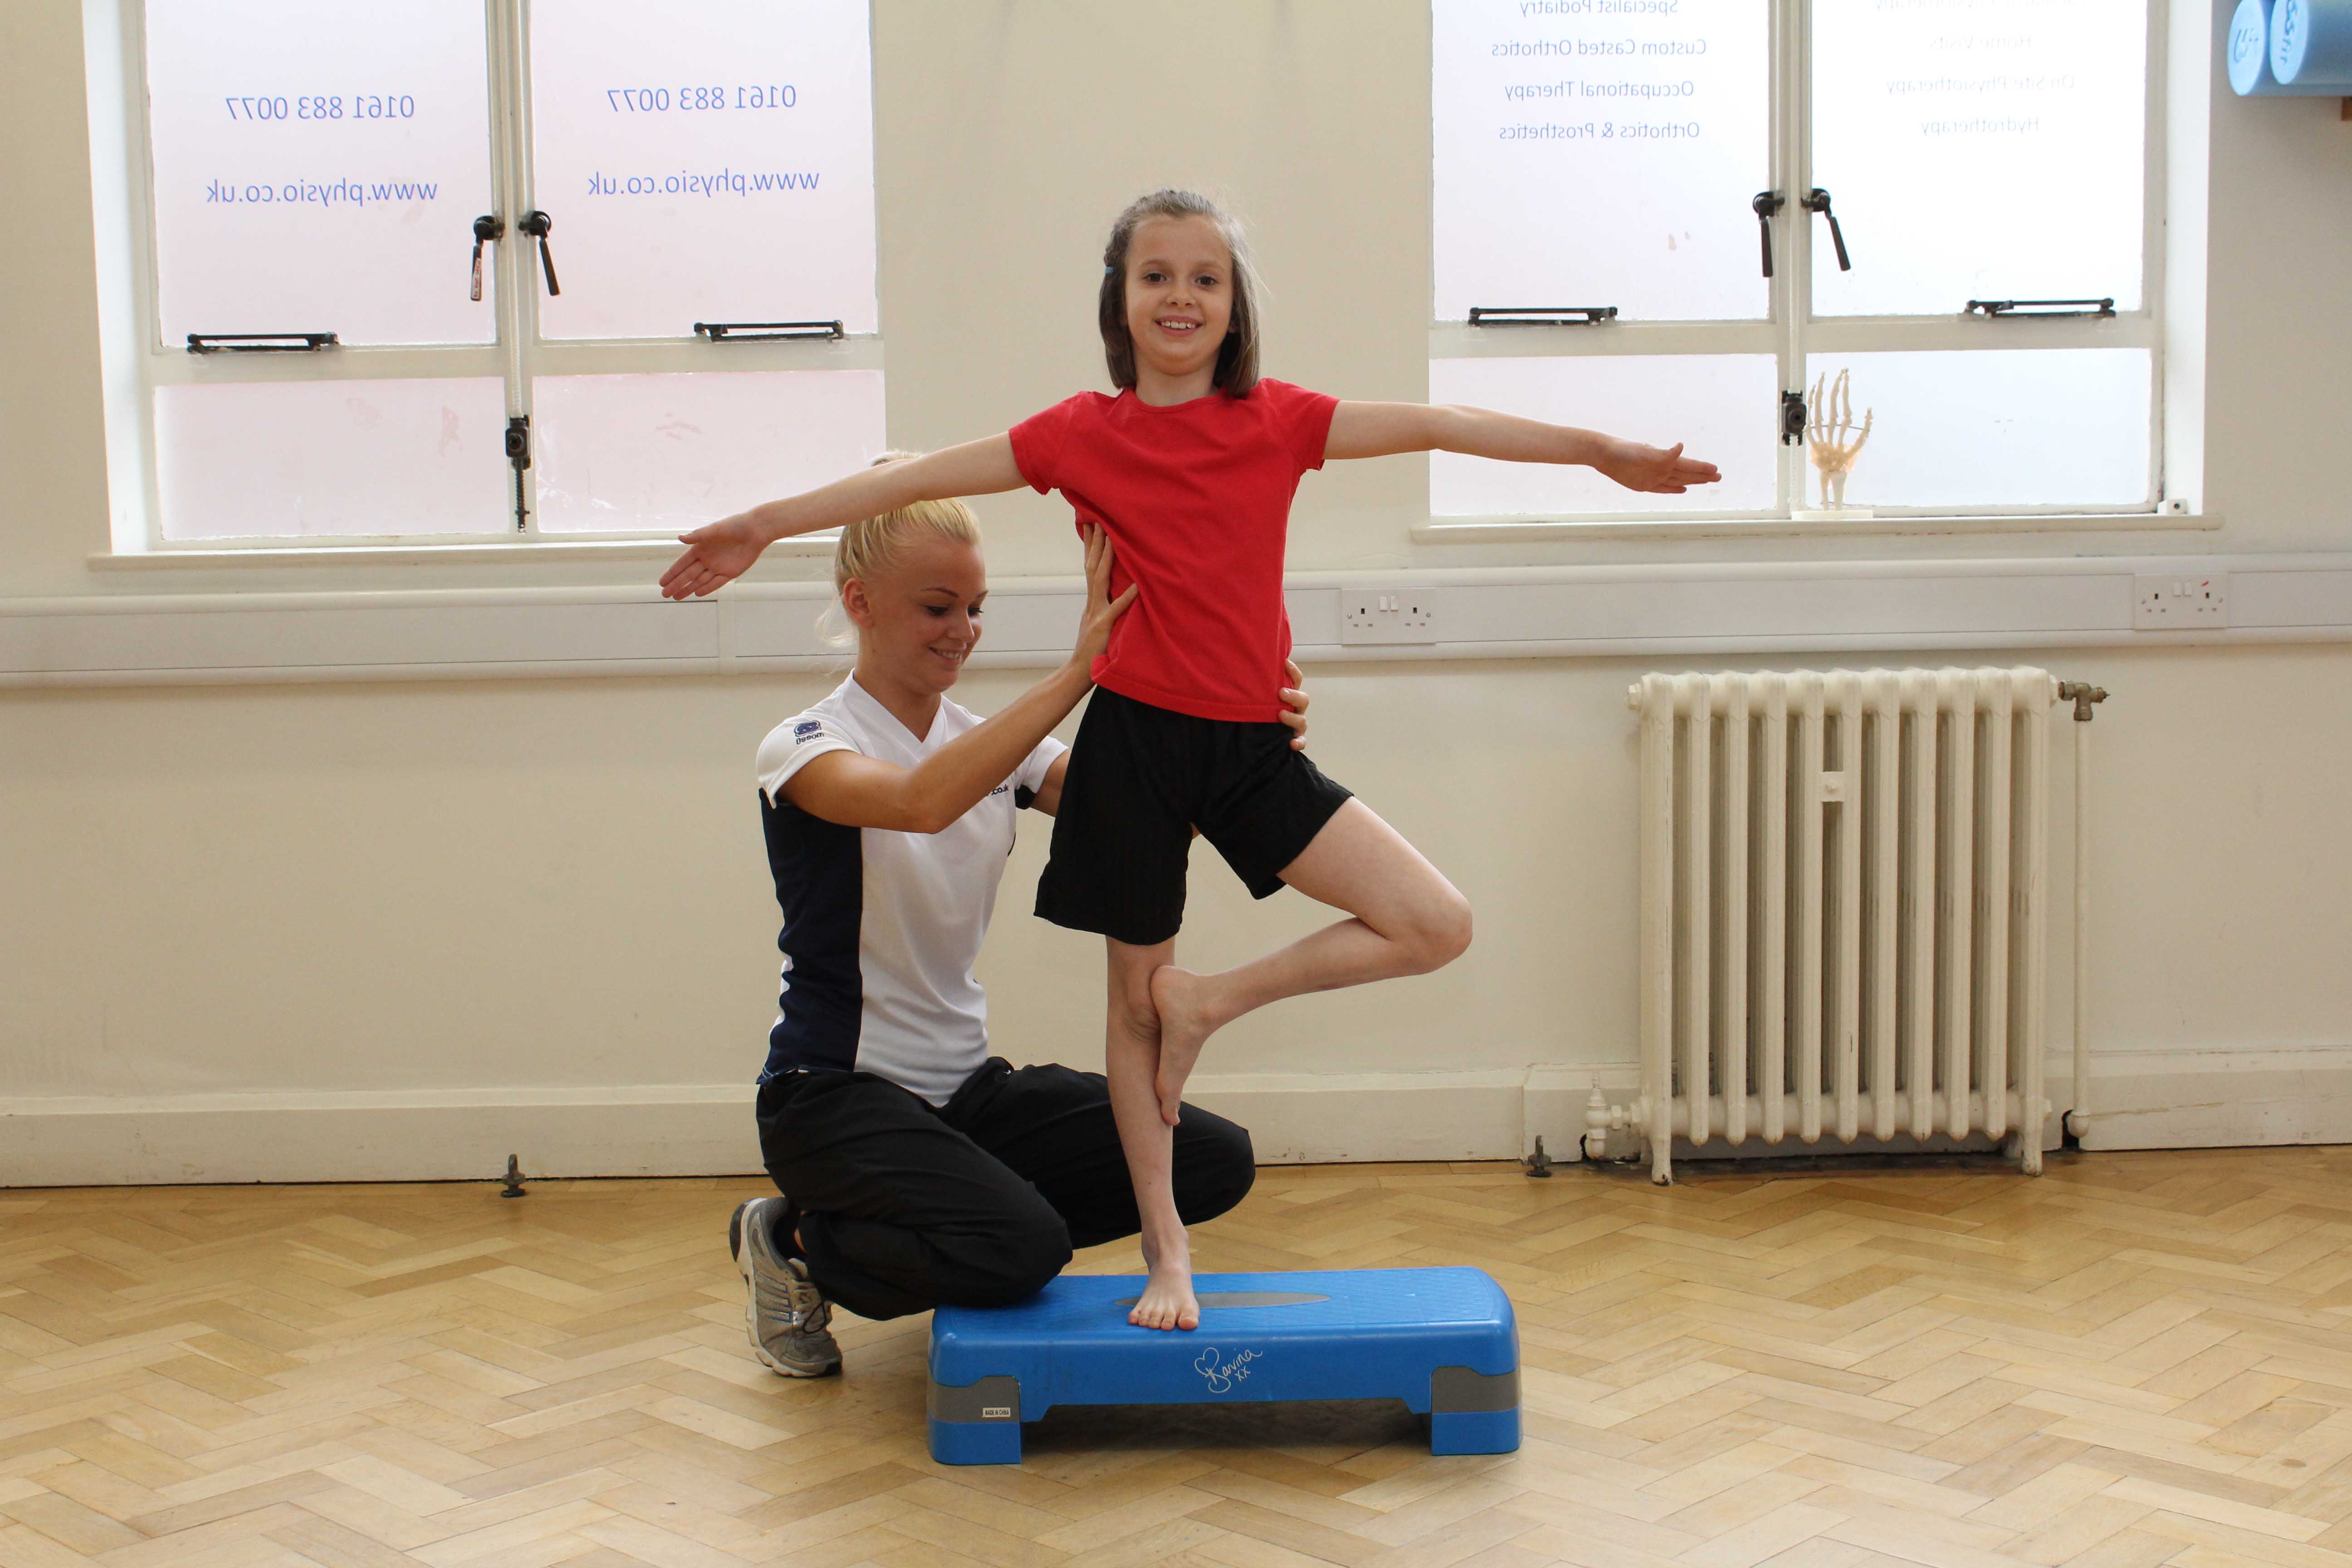 Therapist assists during progressive balance training exercises